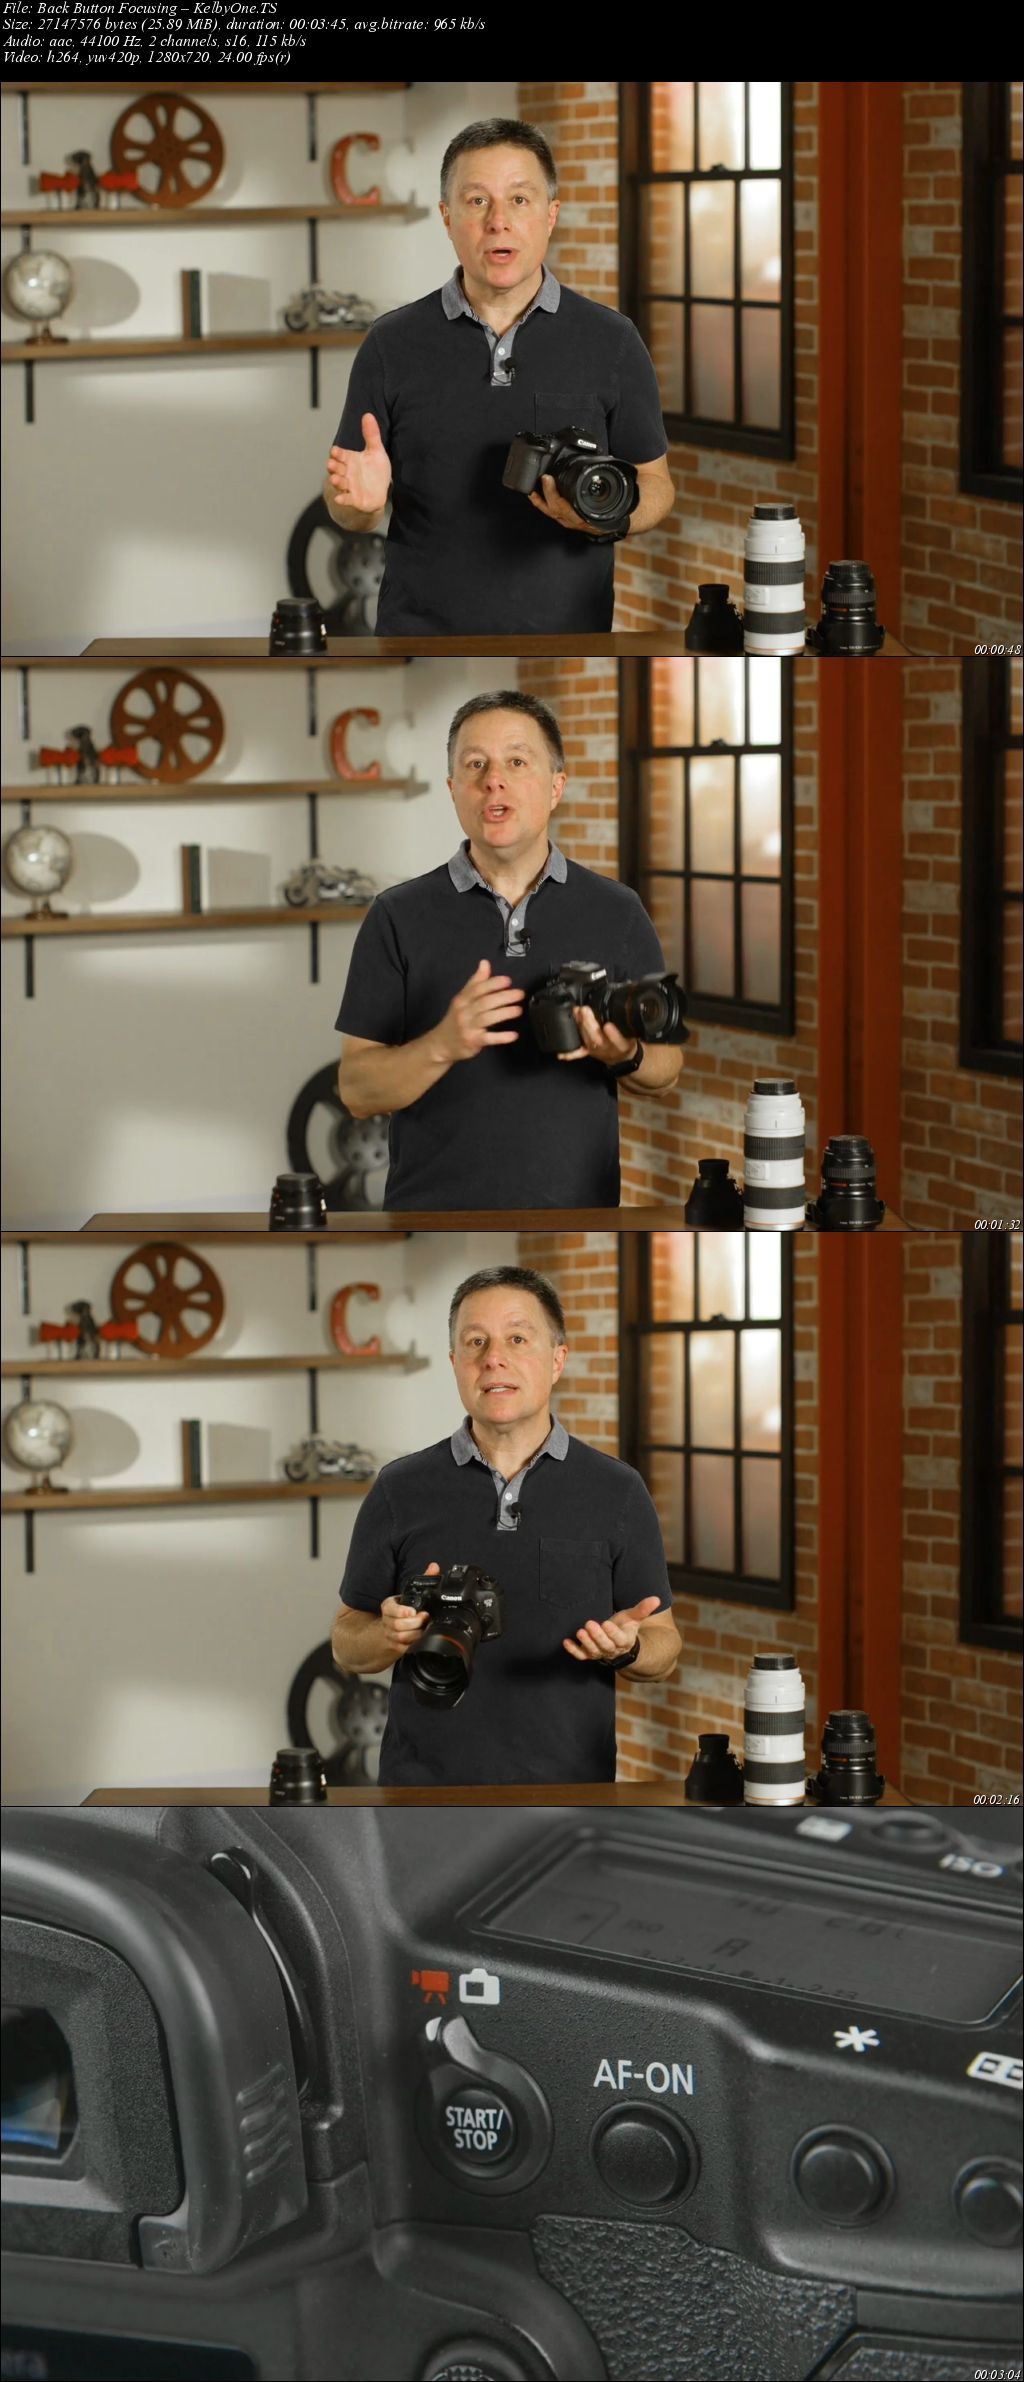  KelbyOne - Camera Focus Techniques: The Key To Super Sharp Photos